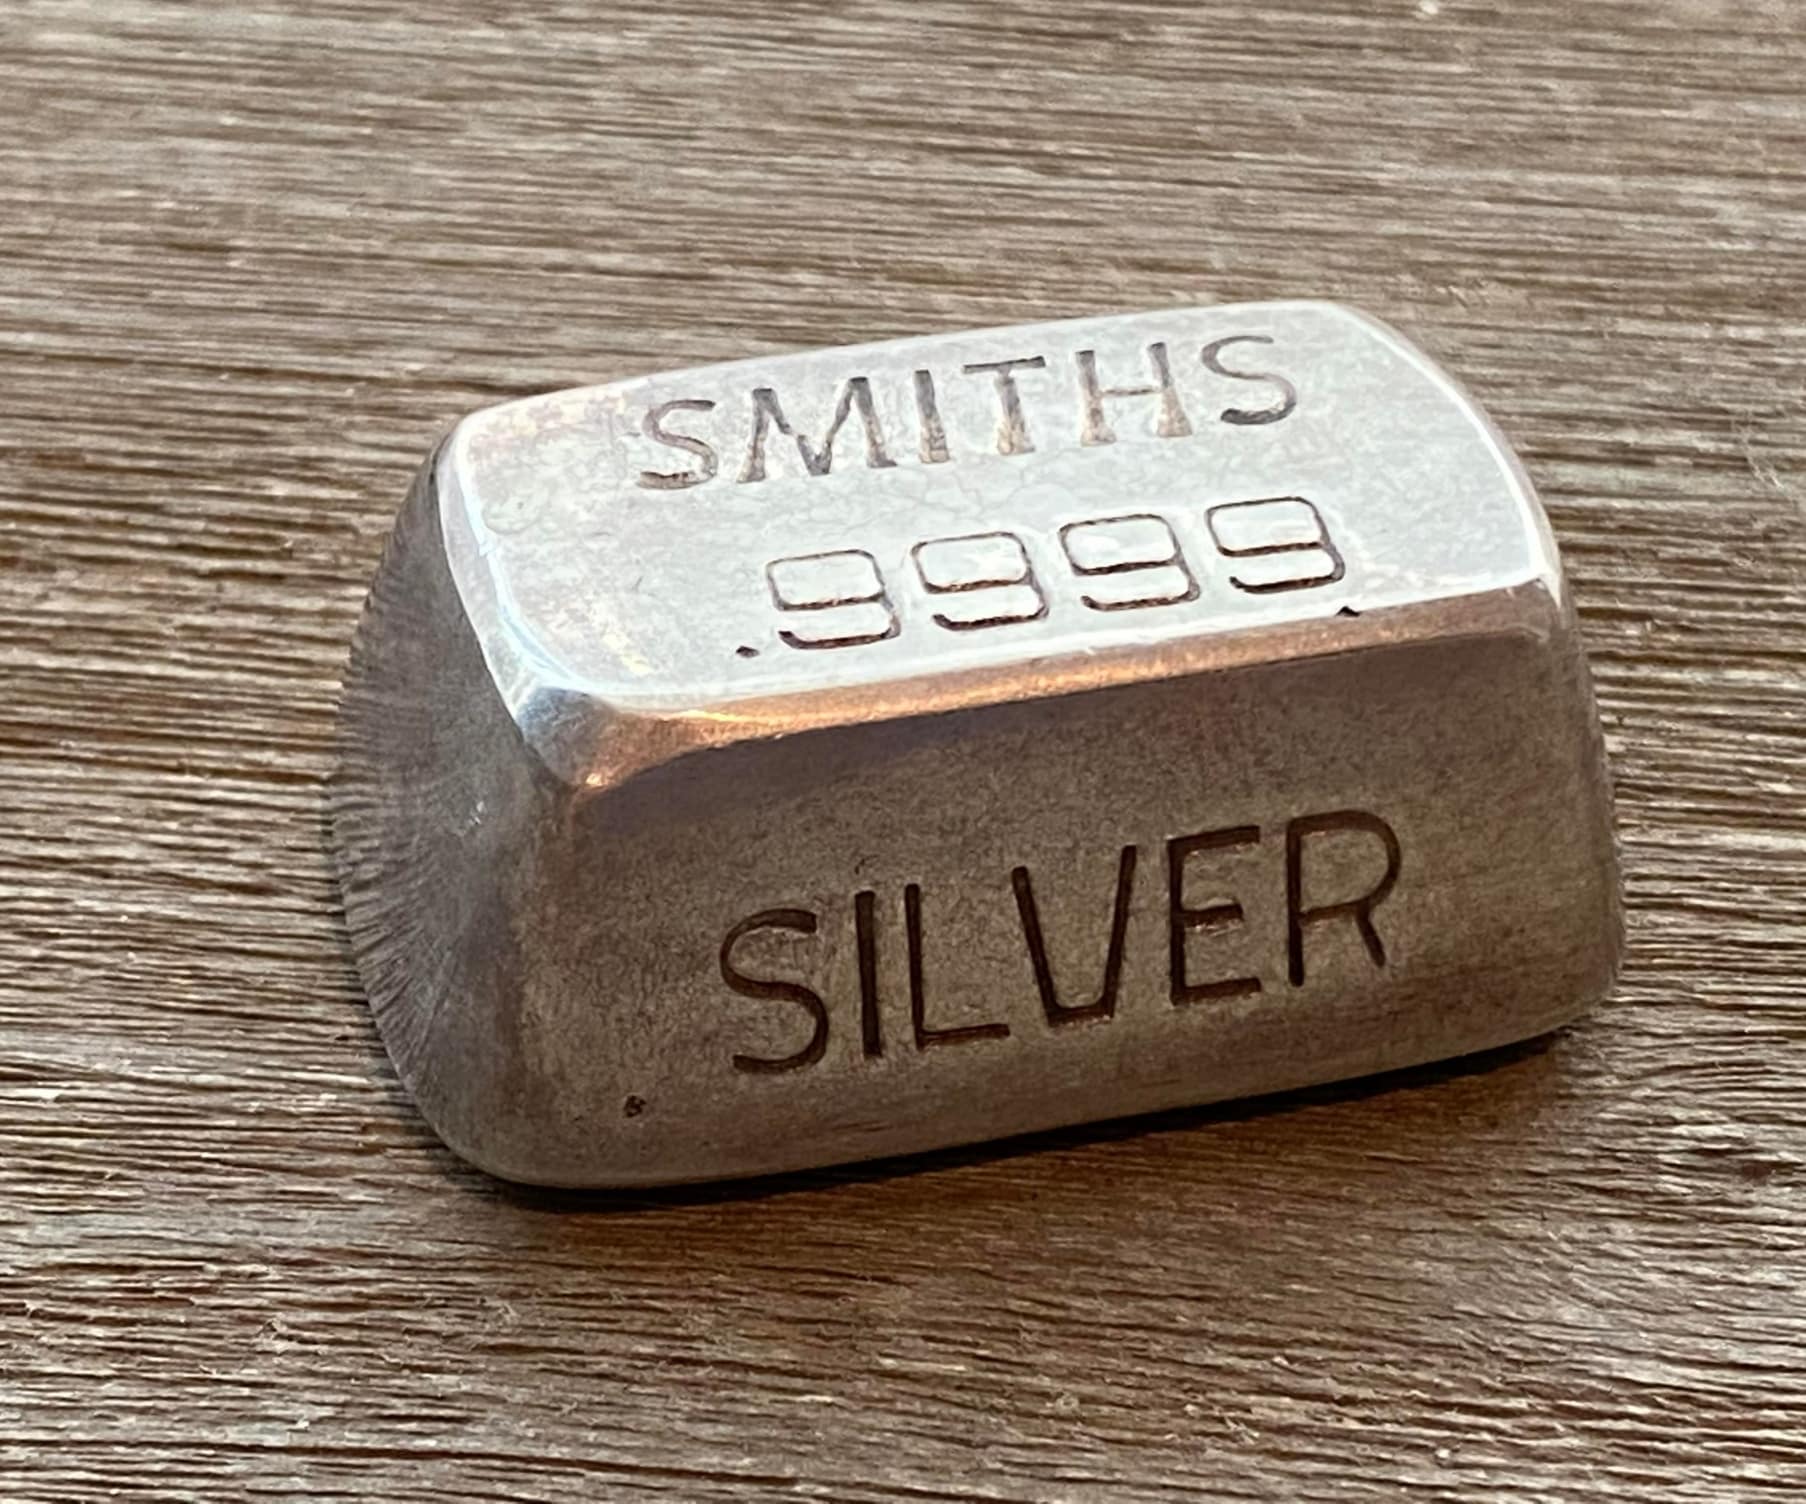 Smiths 5.21 oz vintage silver bar